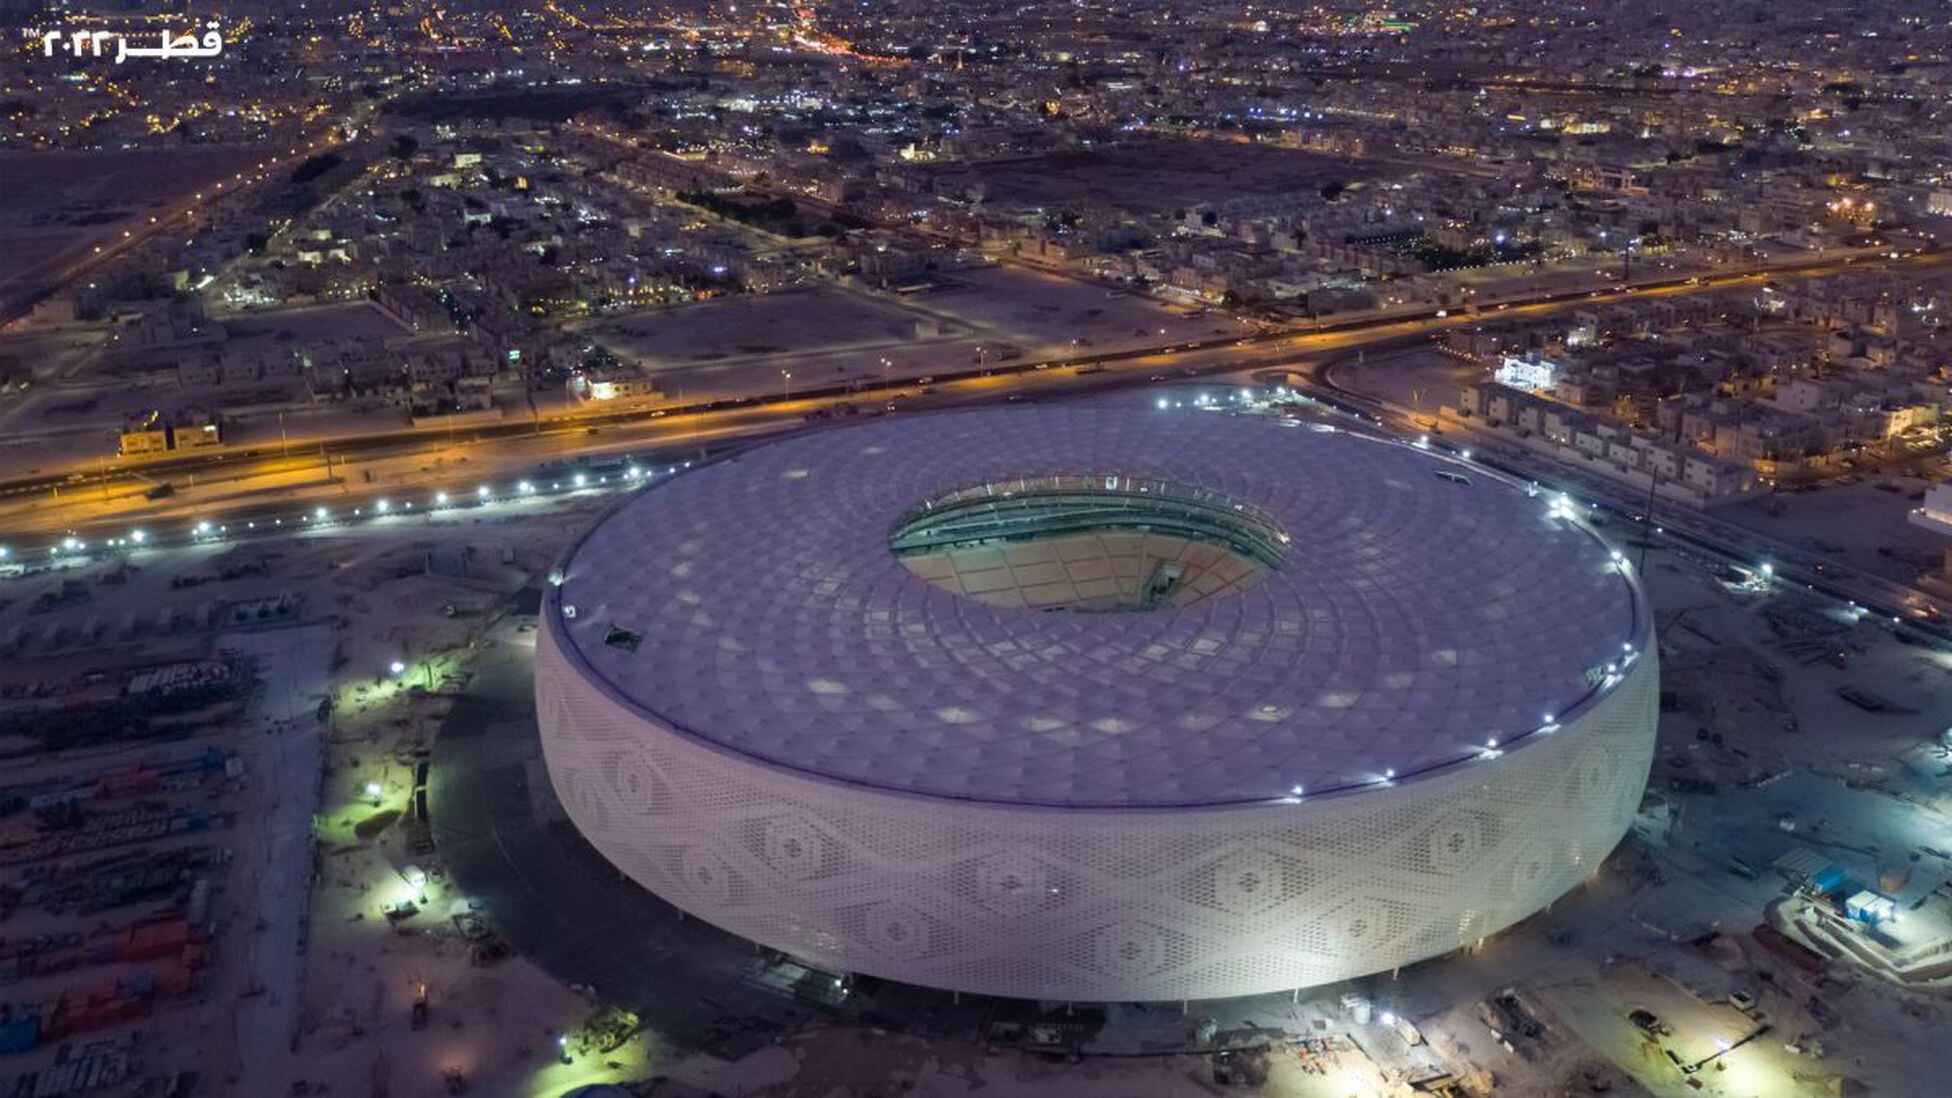 Al Thumama stadium nearly ready for FIFA World Cup 2022 - AS USA